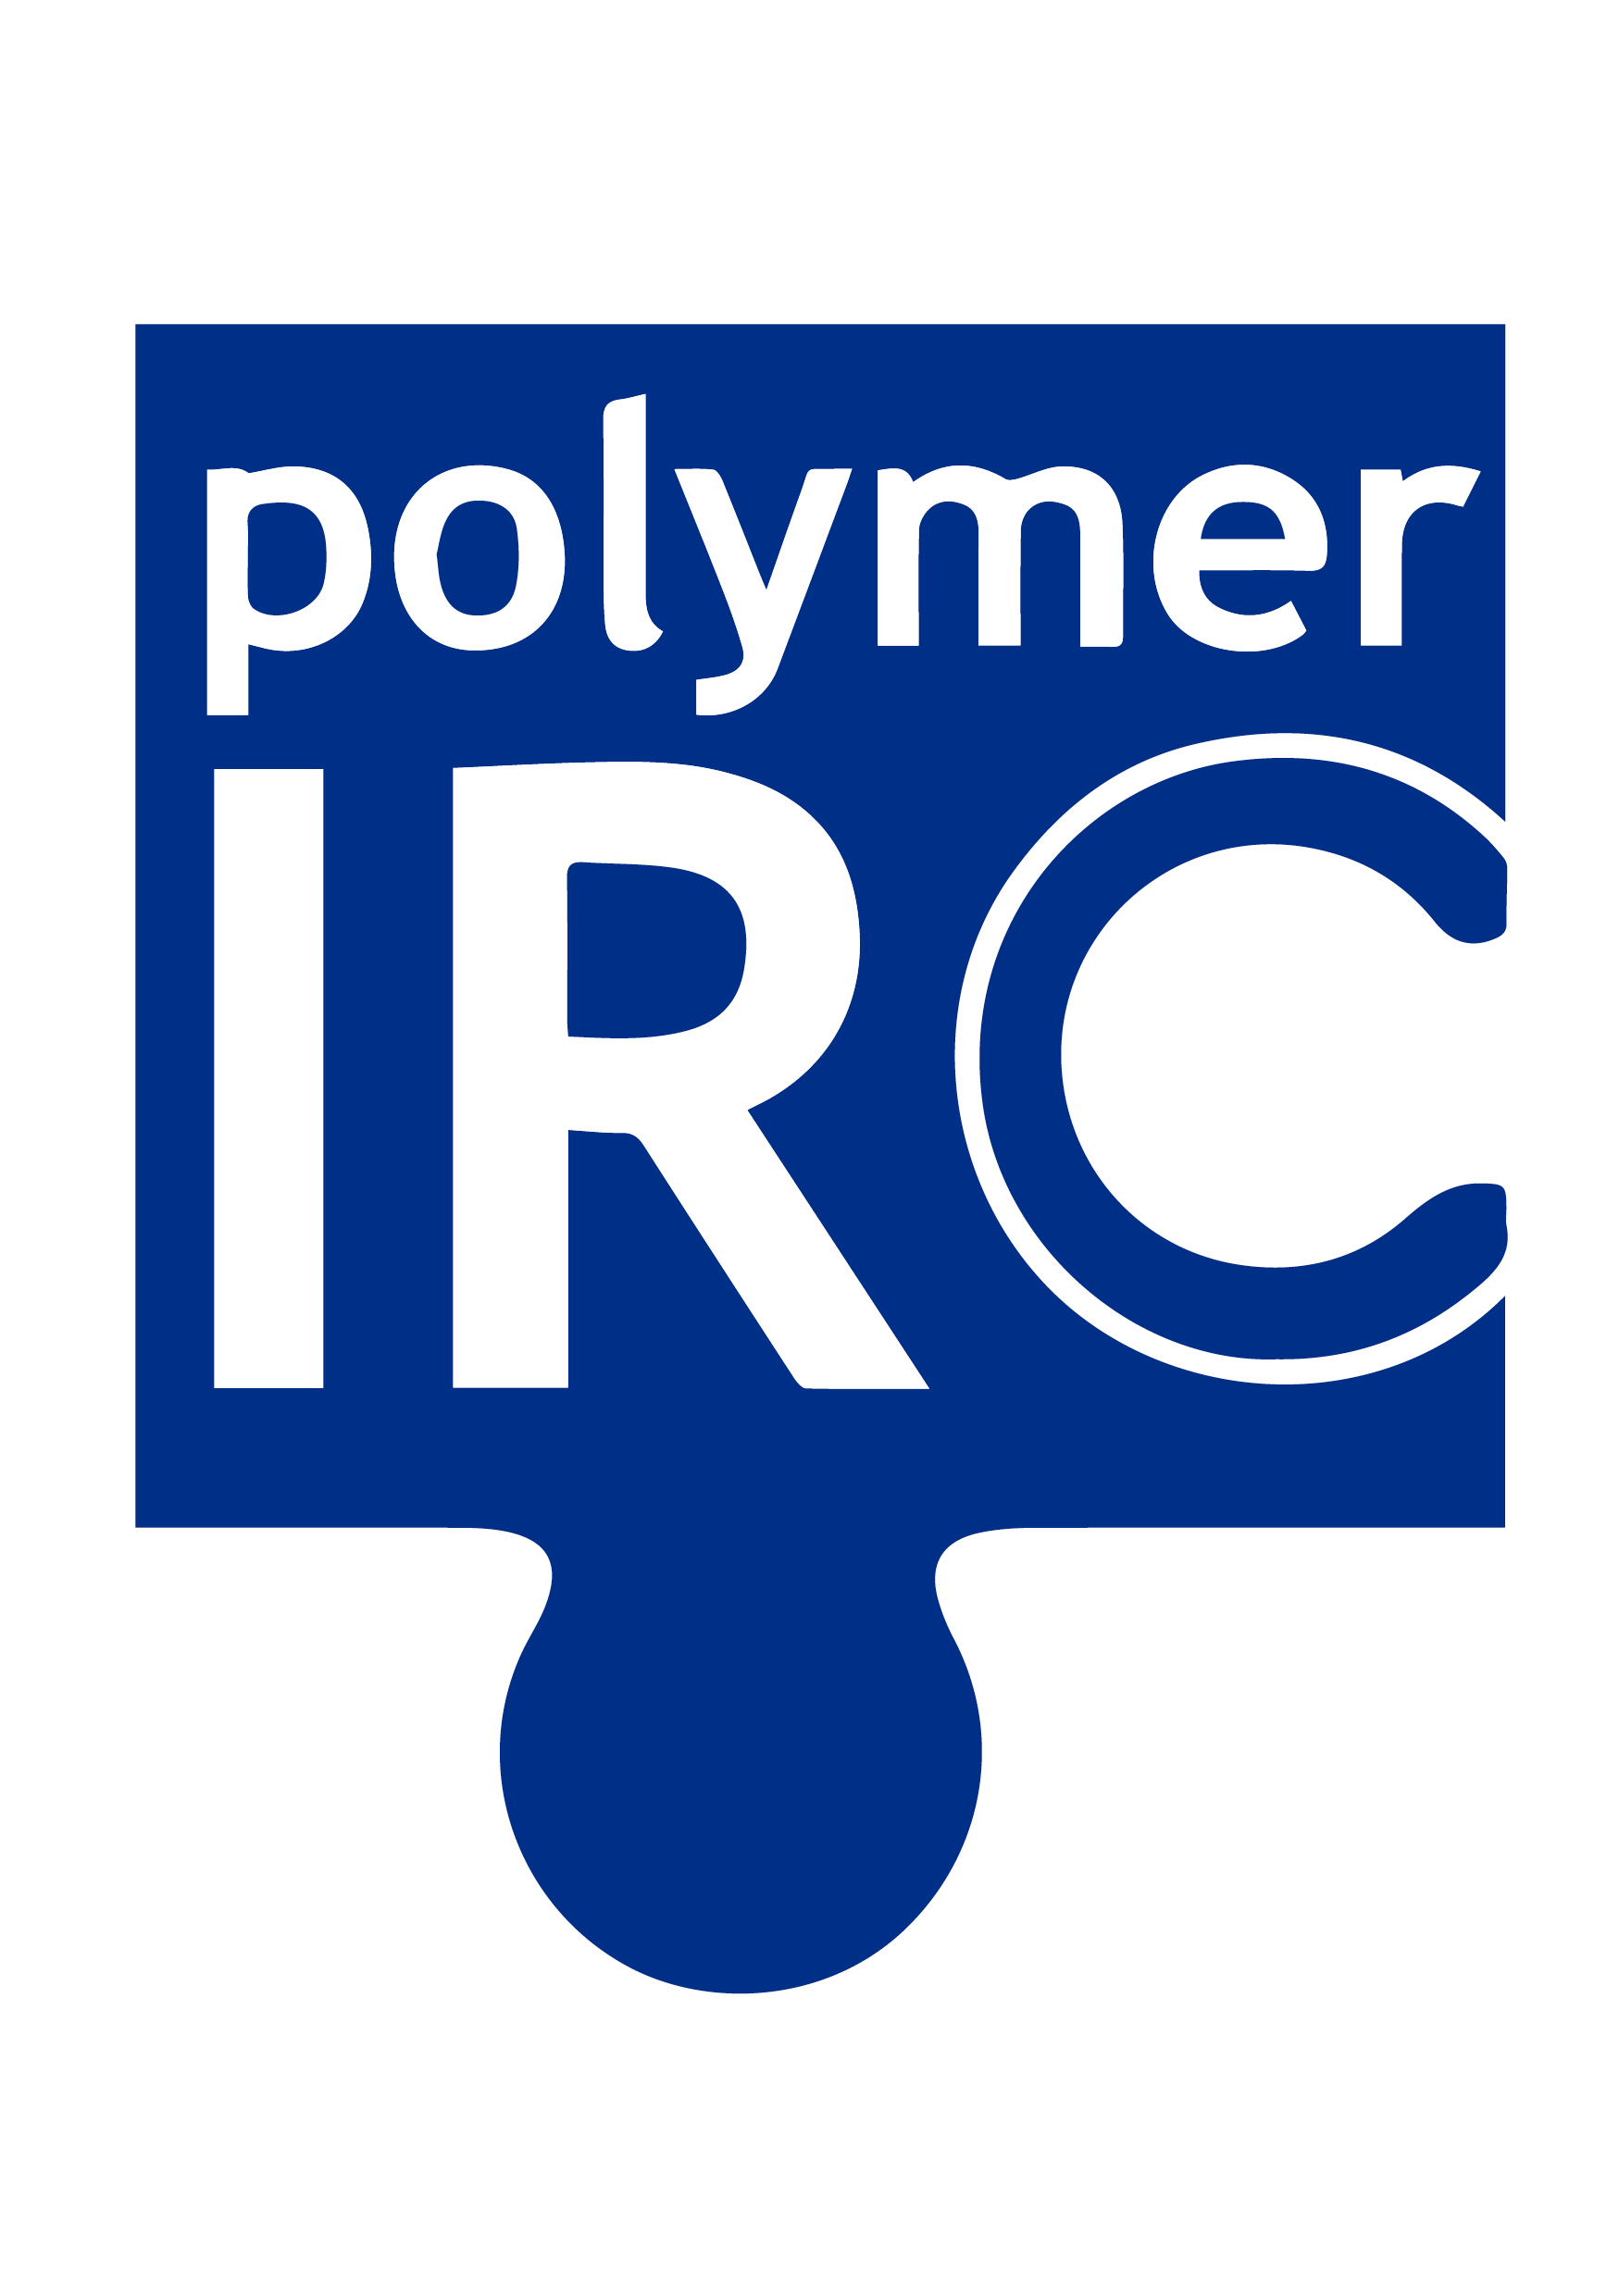 University of Bradford, Polymer IRC